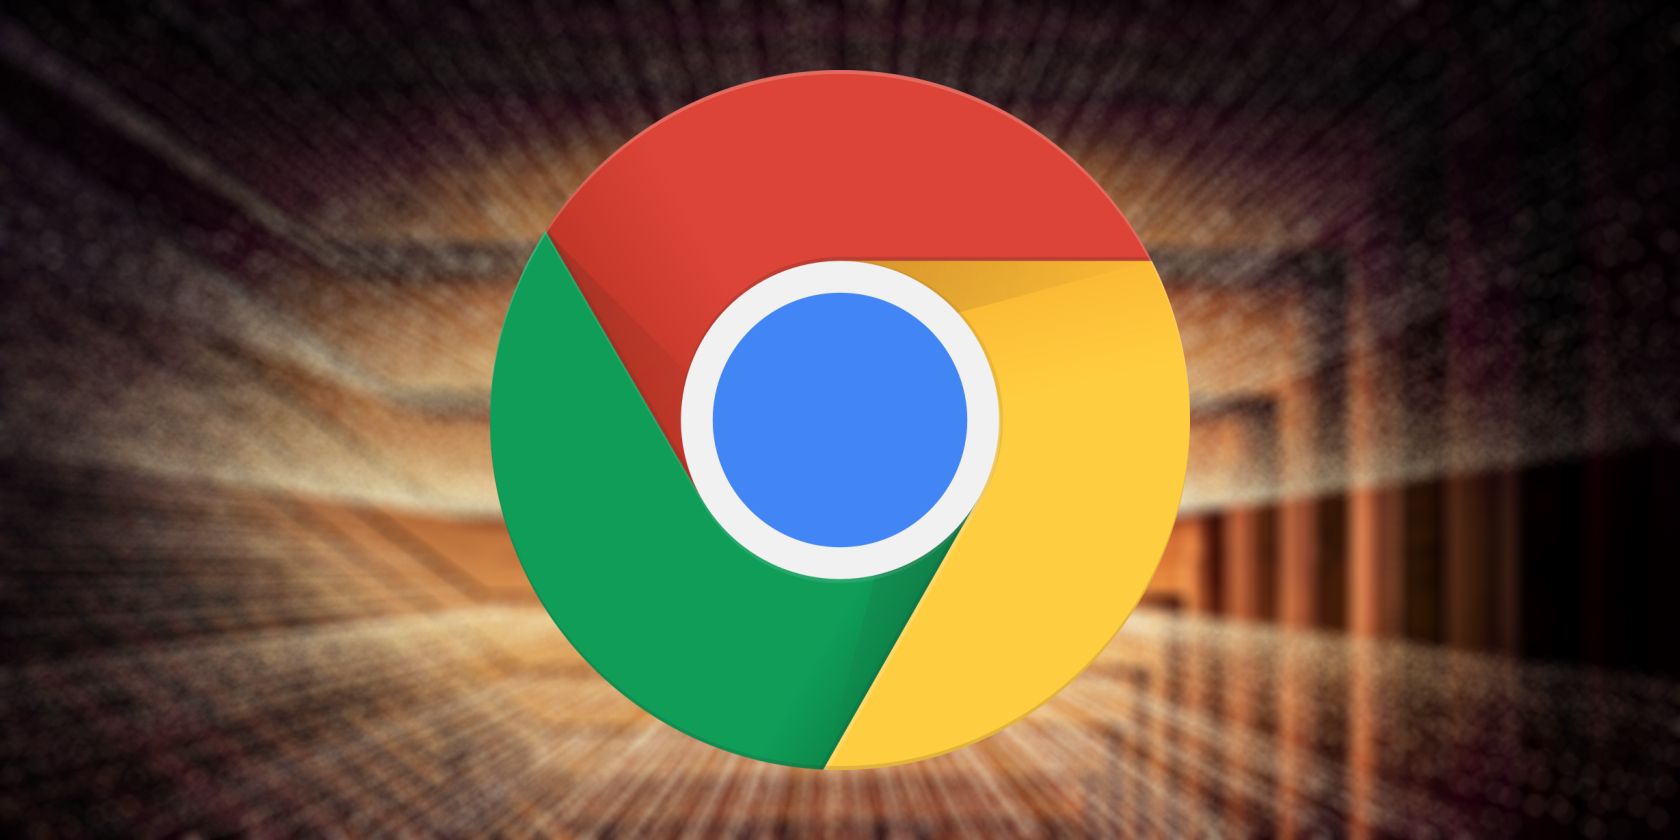 Google Chrome Will Return to Showing Full URLs